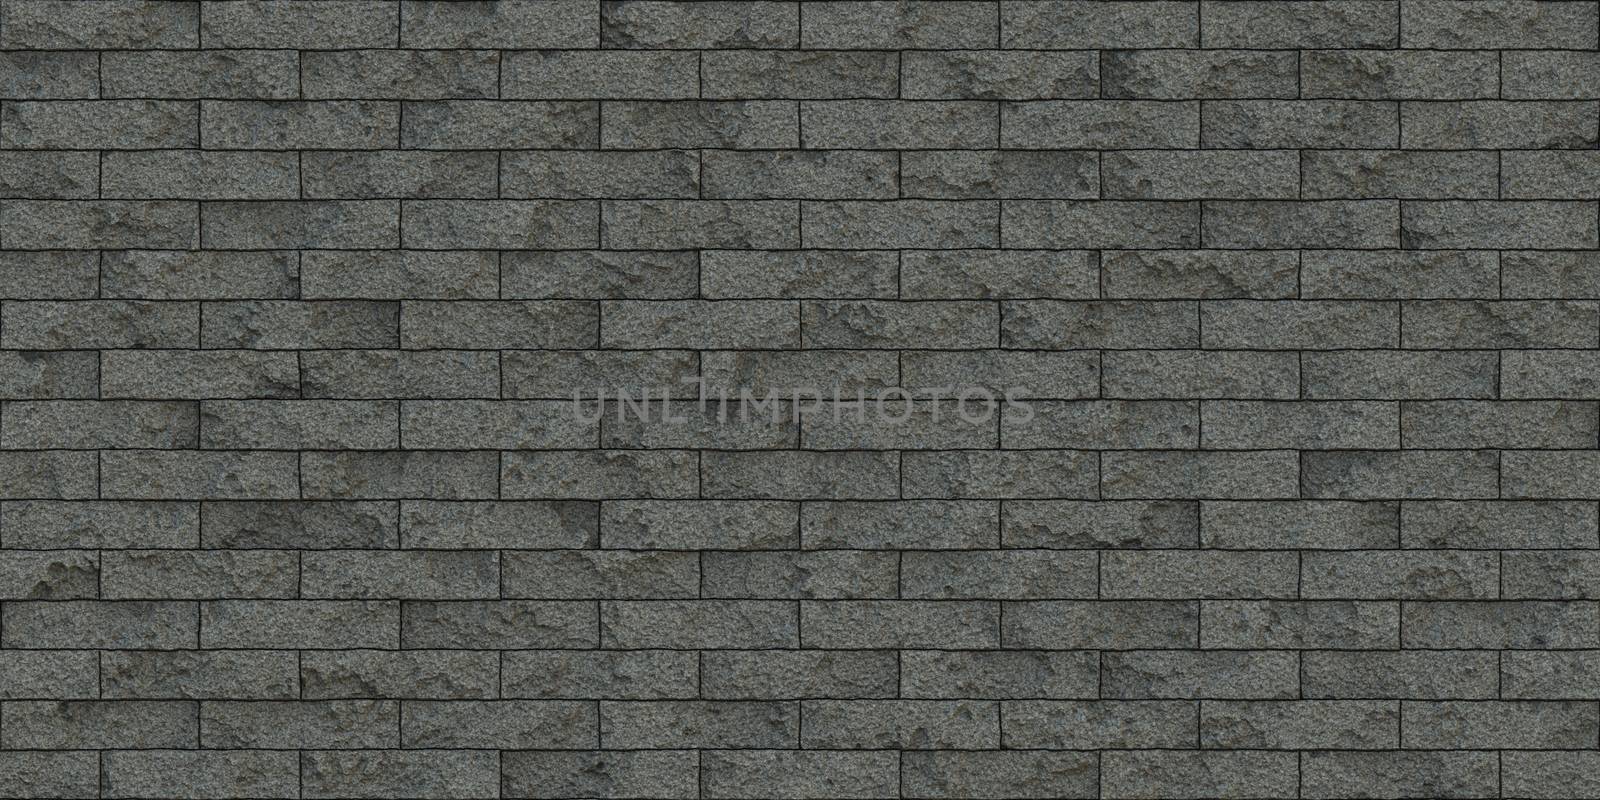 Grey Seamless Stone Block Wall Texture. Building Facade Background. Exterior Architecture Decorative House Facing.